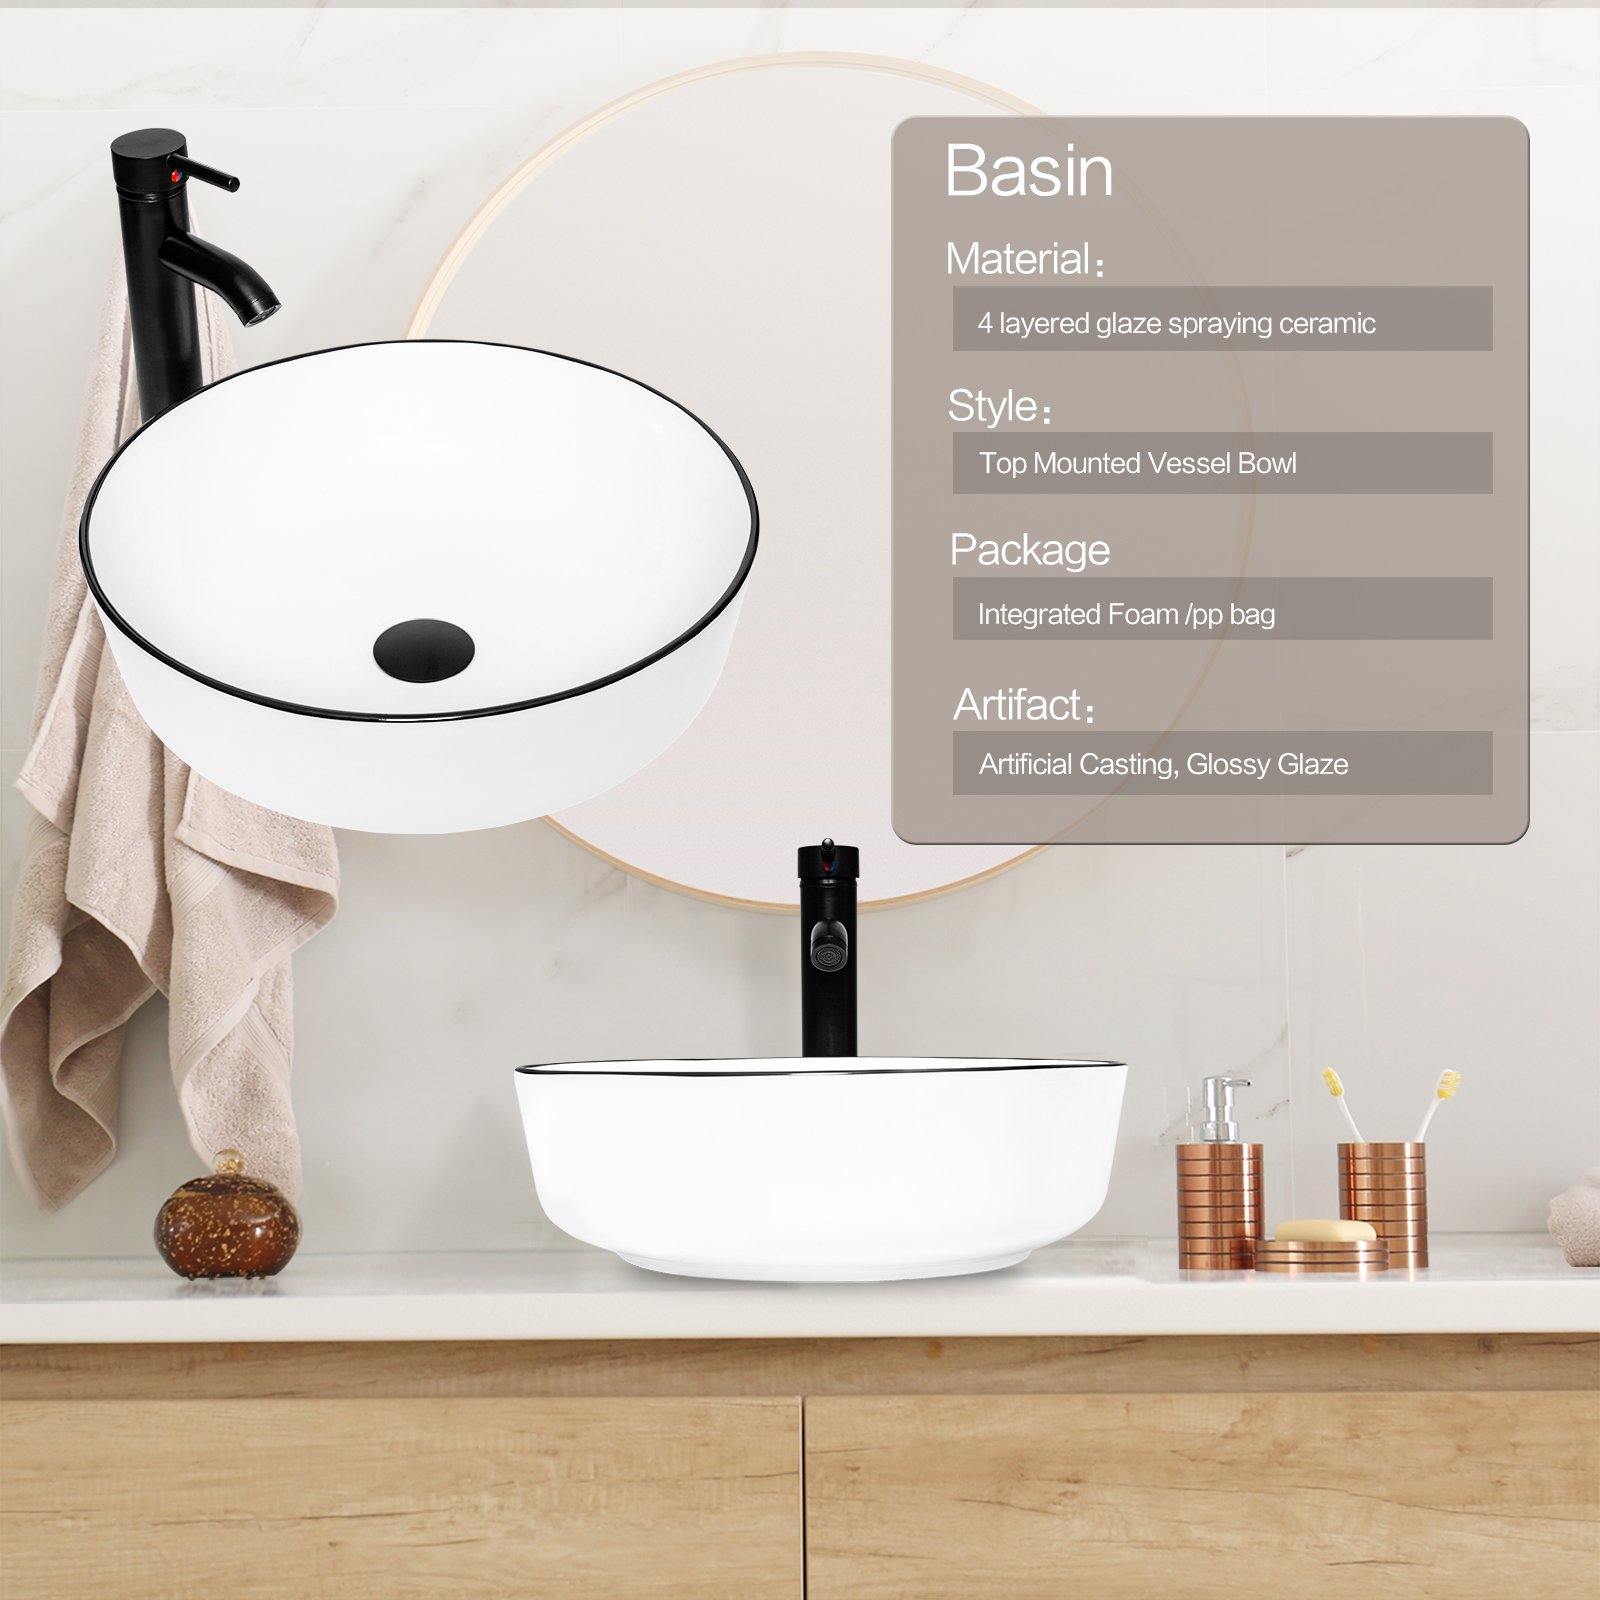 Elecwish White Ceramic Vessel Sink BG1009 basin specification and display scene